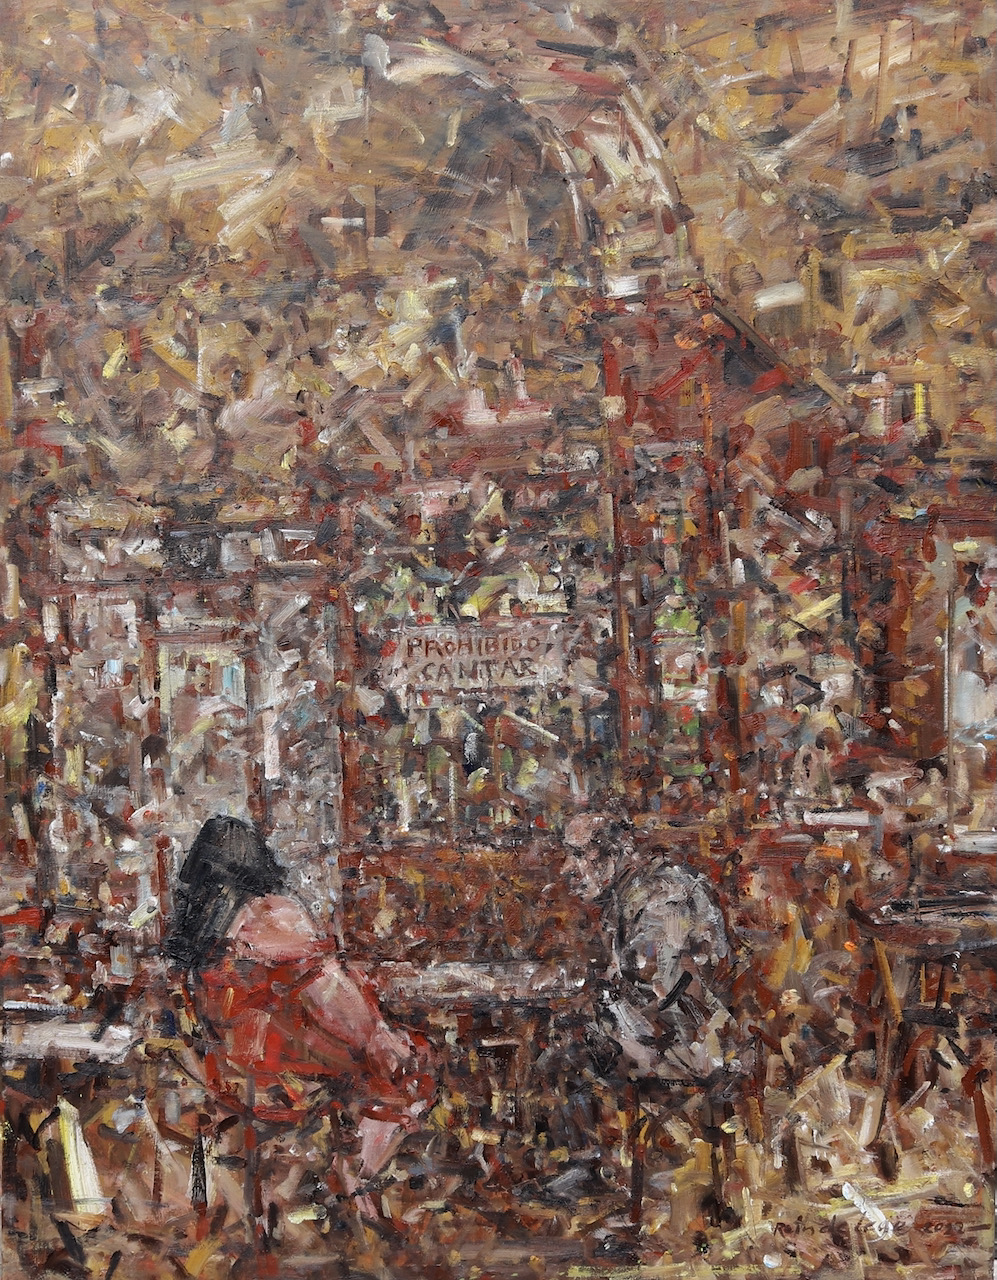 2022 “Prohibido Cantar” Oil on canvas, 116/89 cm.